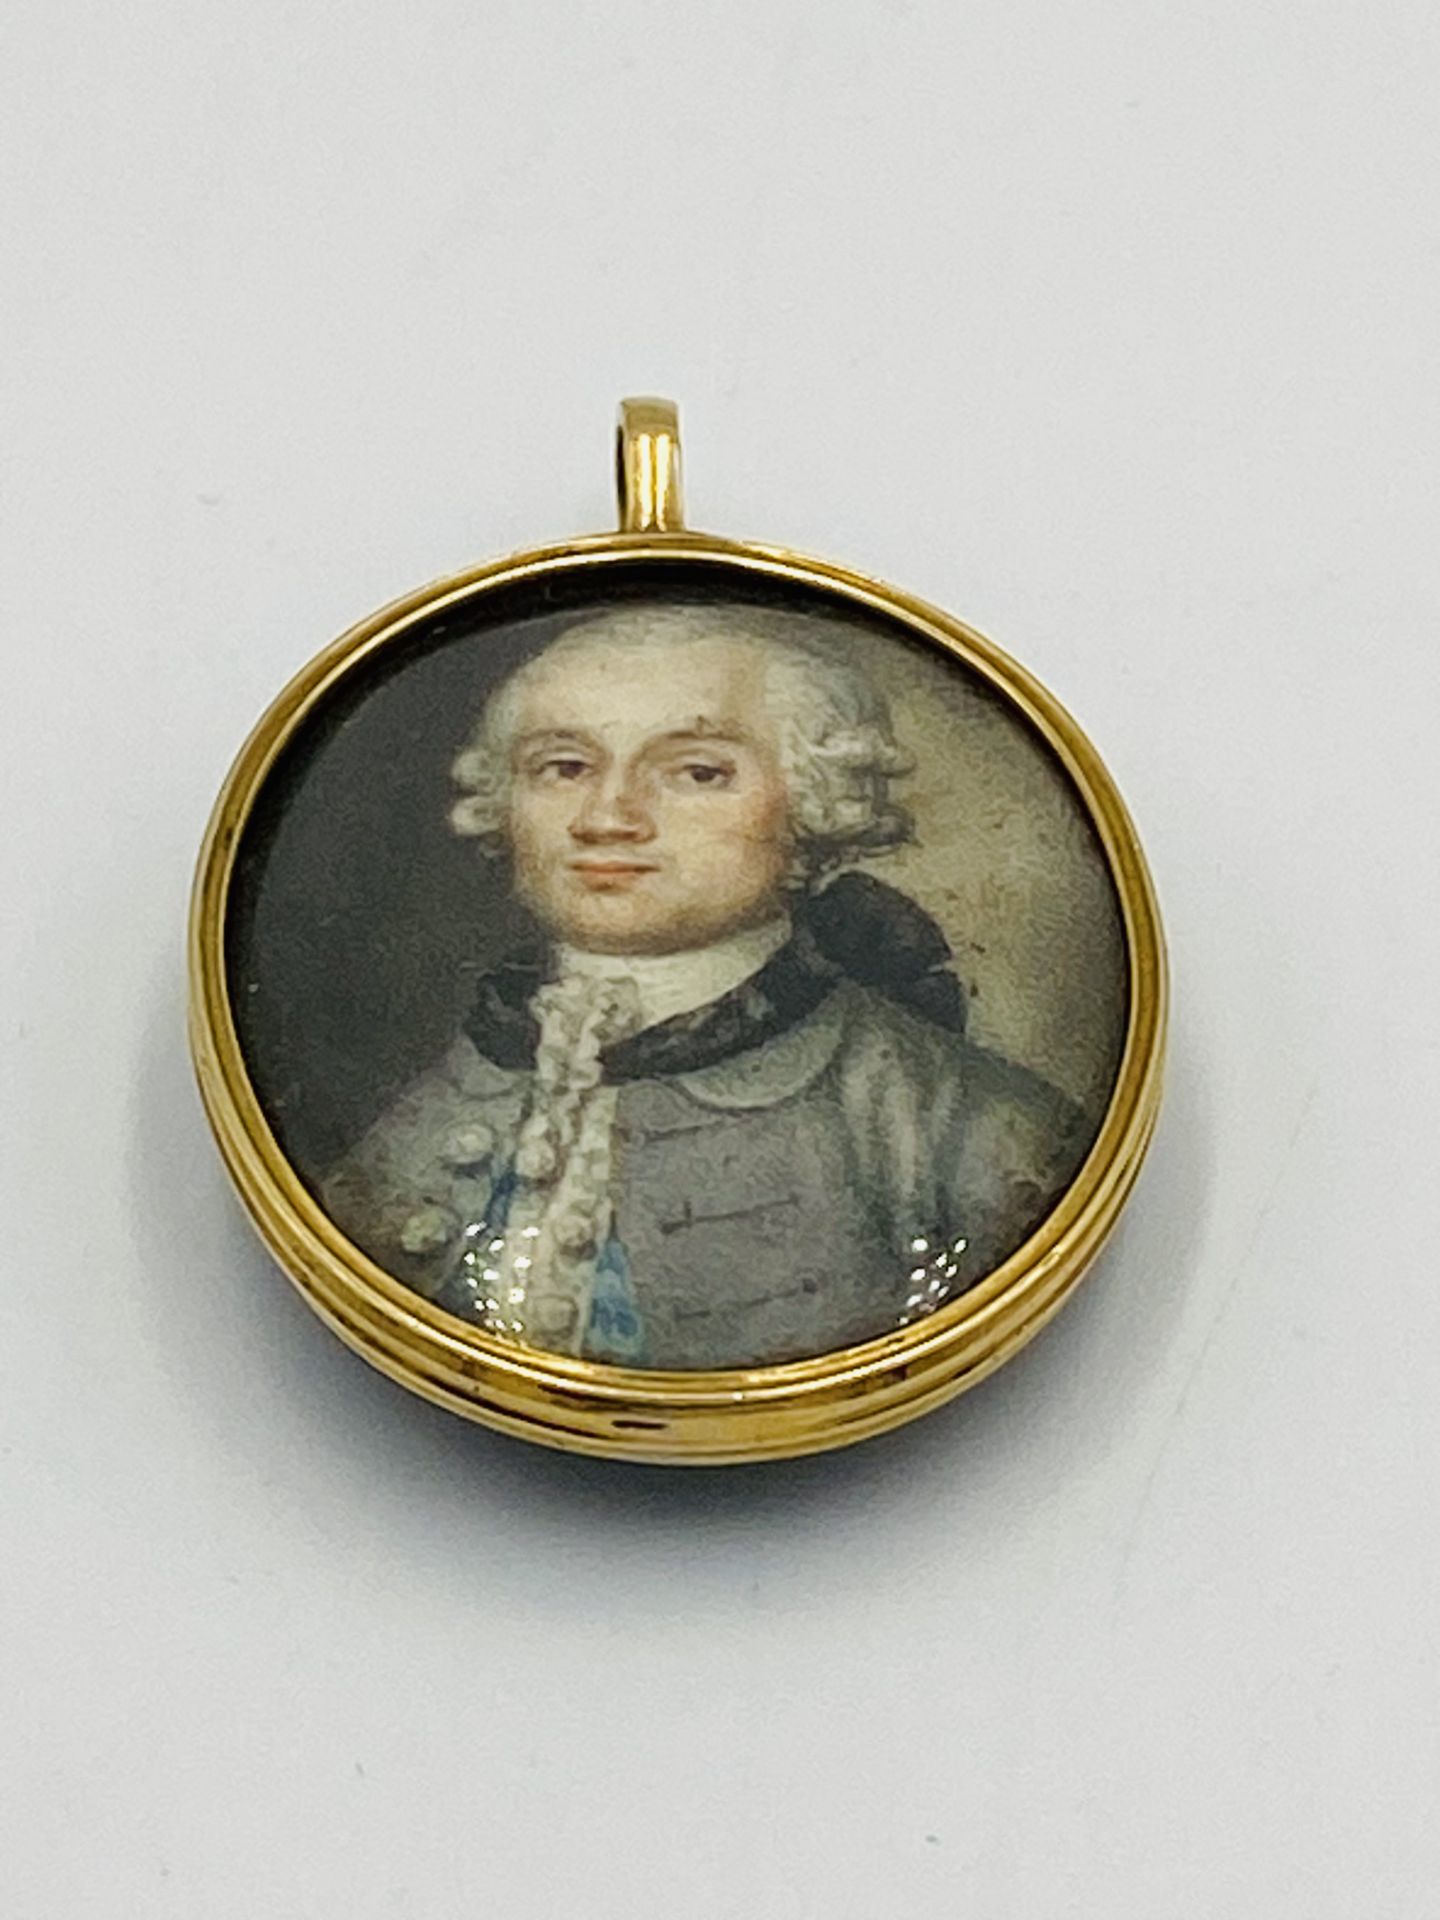 19th century portrait pendant